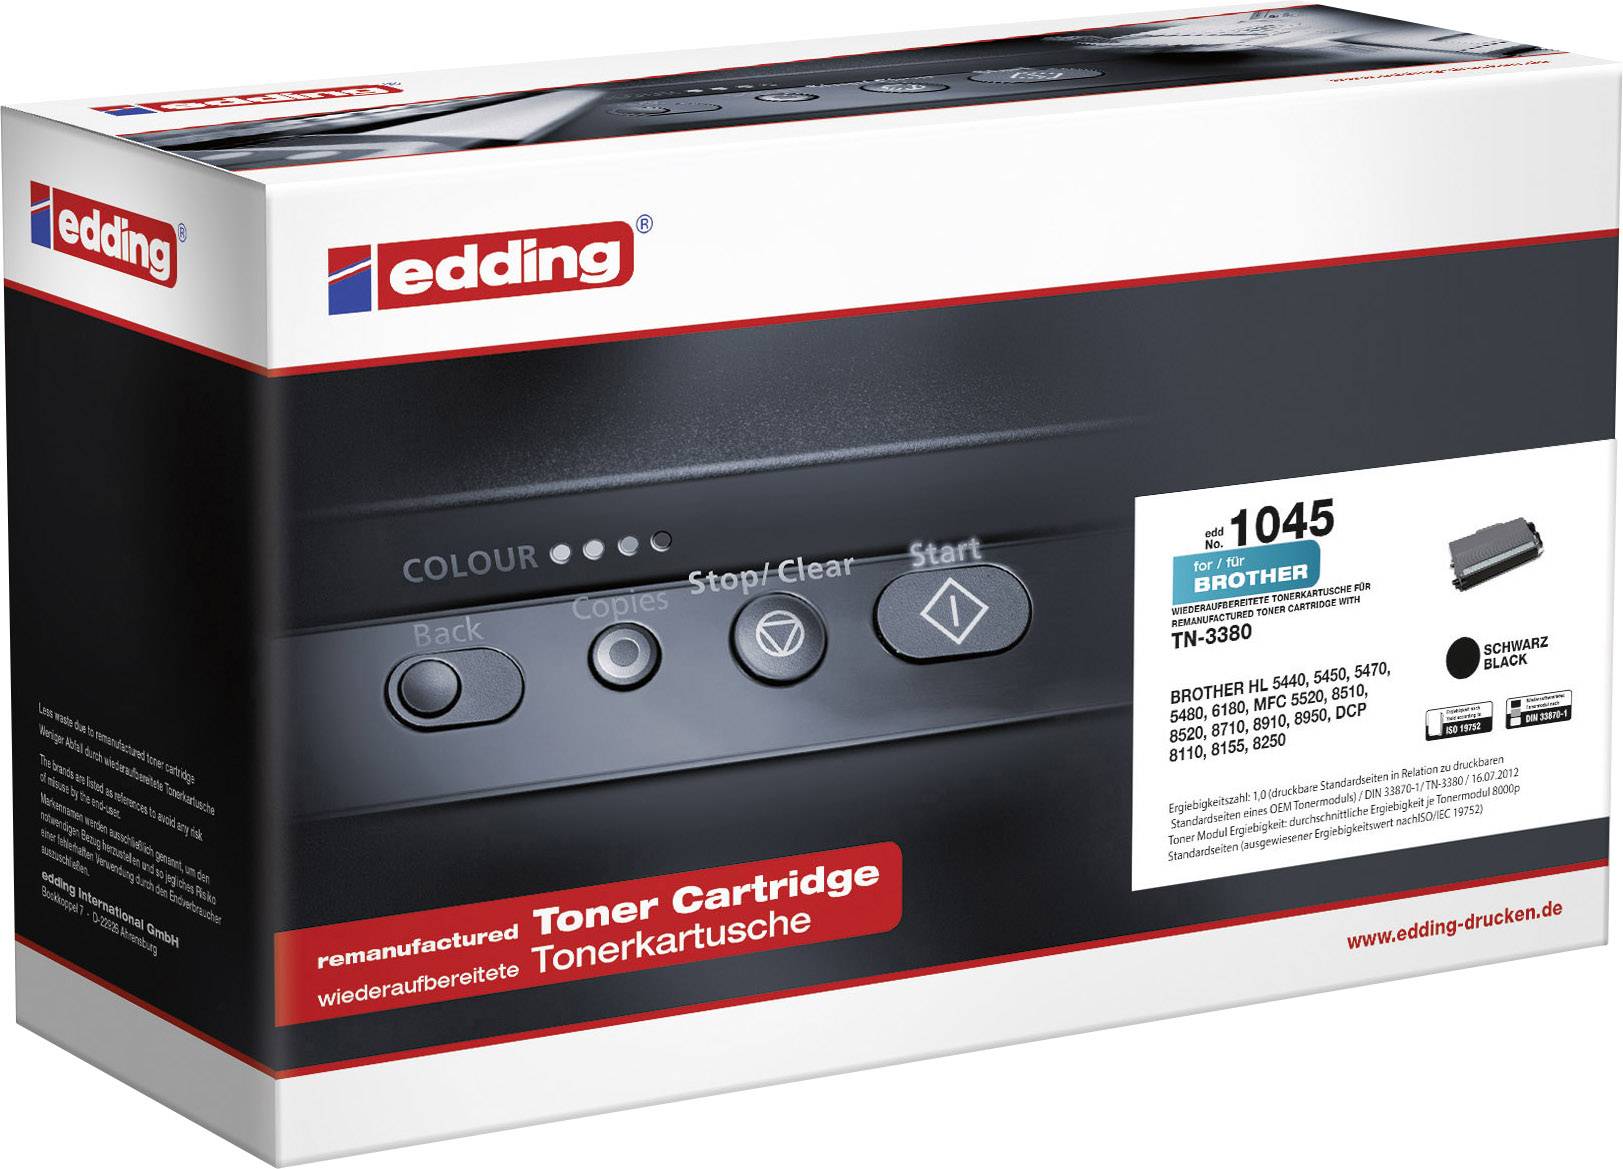 Stranden apotek Fortryd Edding Toner cartridge replaced Brother TN-3380 Compatible Black 8000 Sides  EDD-1045 | Conrad.com